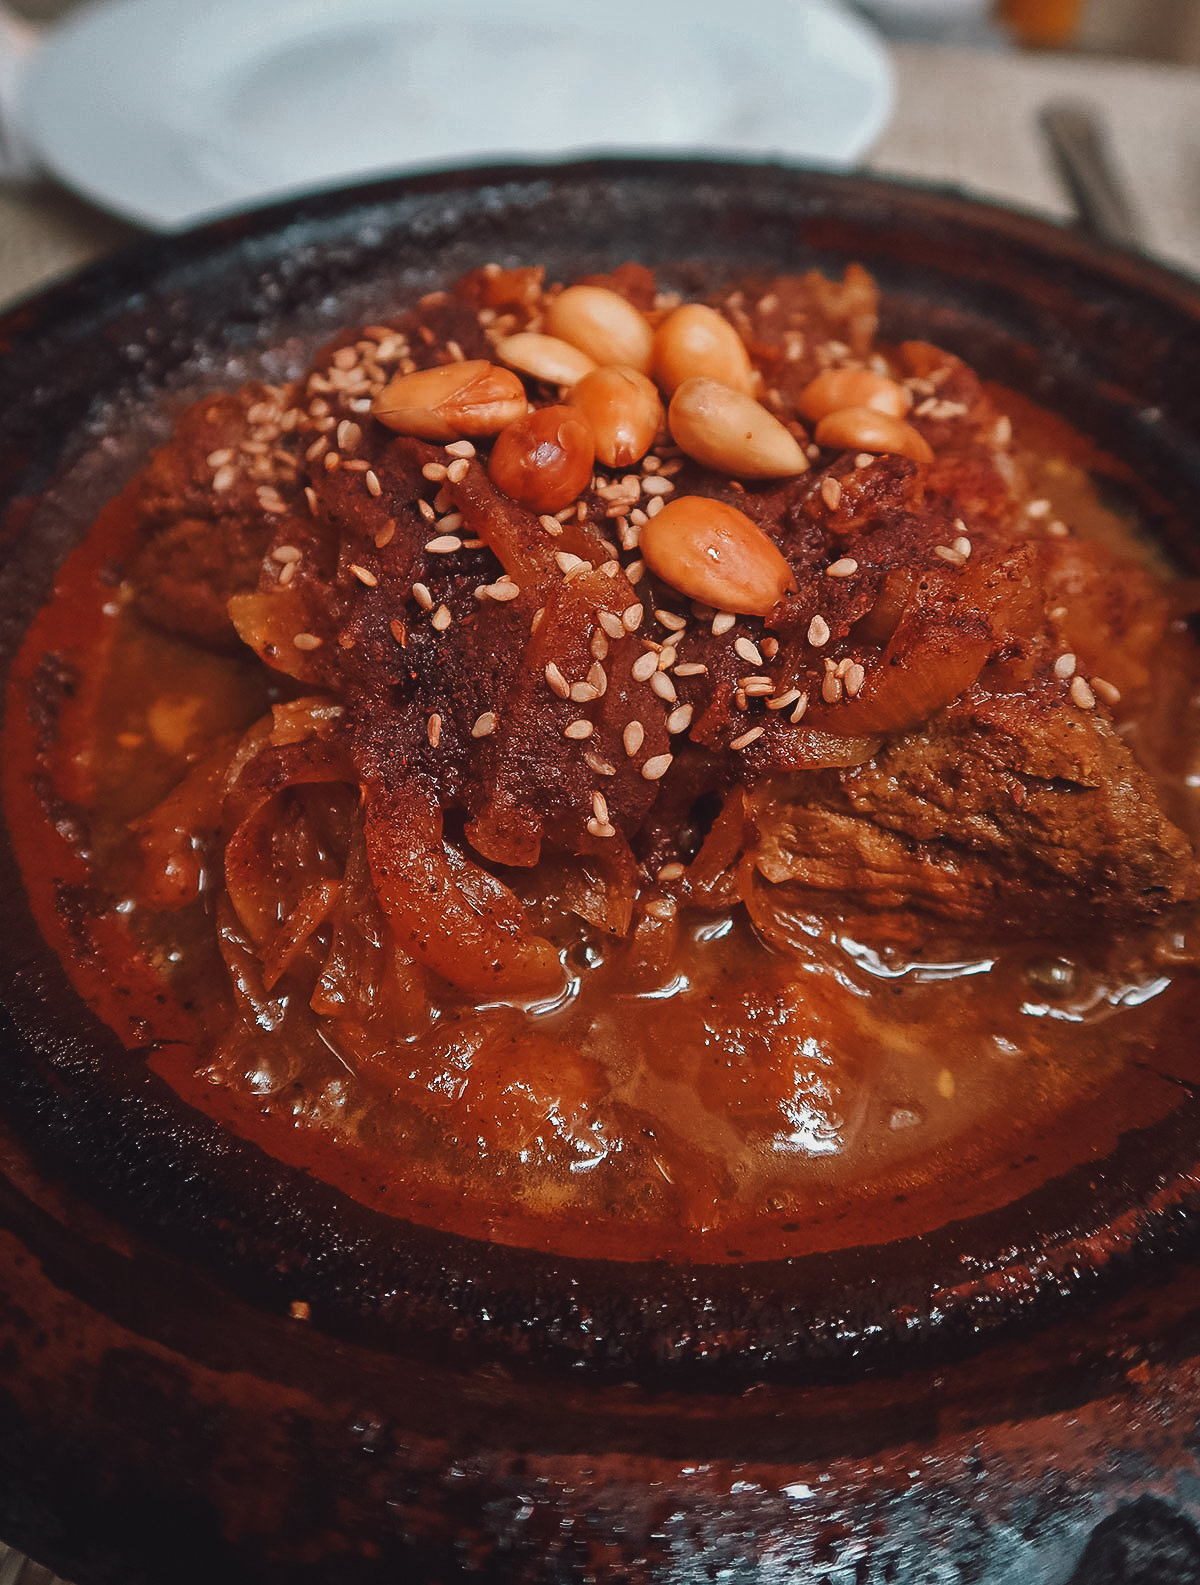 Moroccan lamb dish at a restaurant in Marrakech